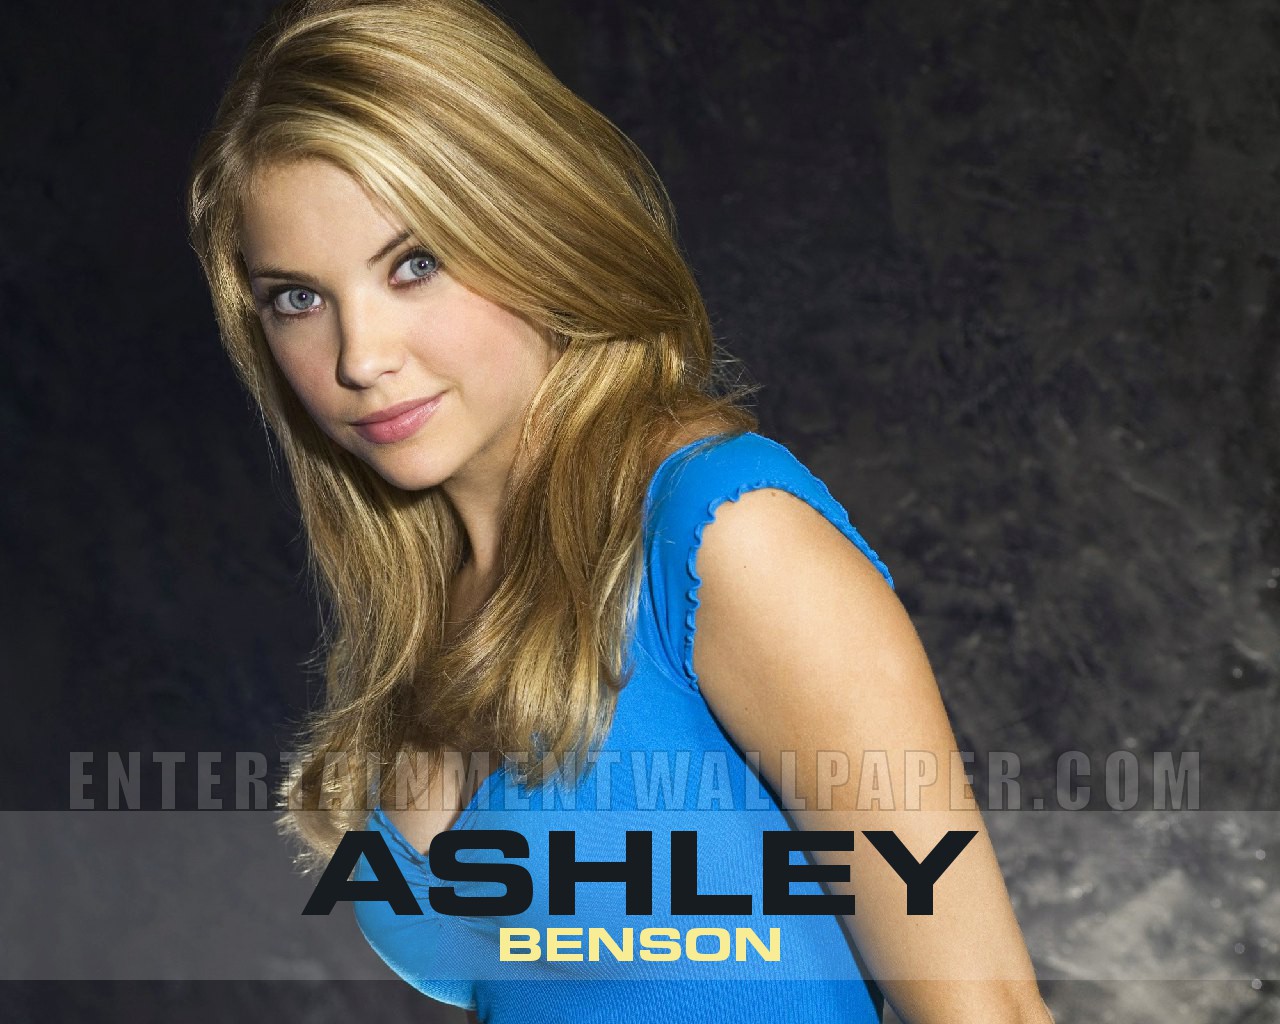 Ashley Wallpaper Benson